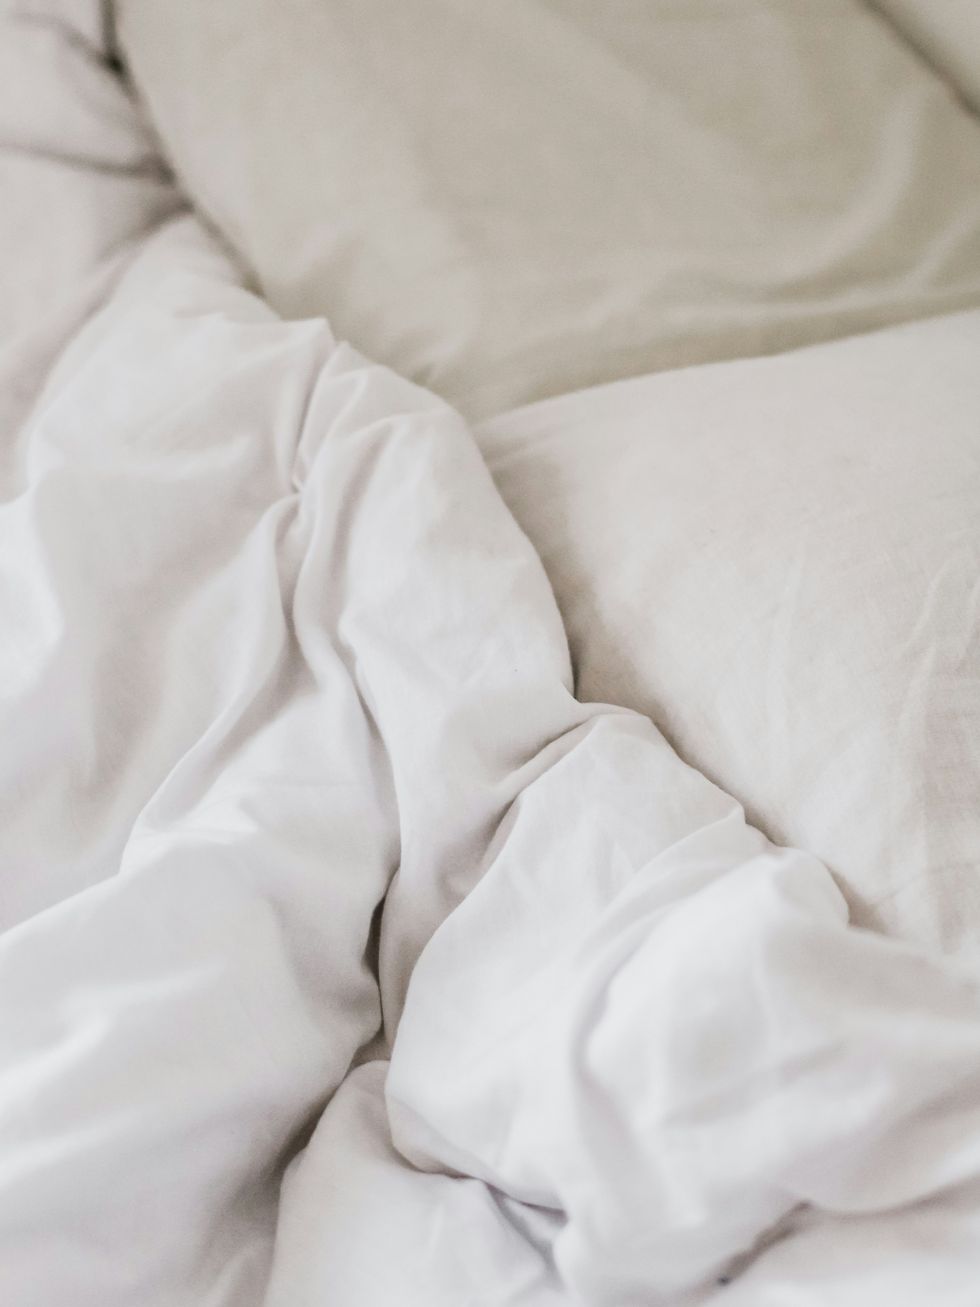 a white sheet with a white pillow